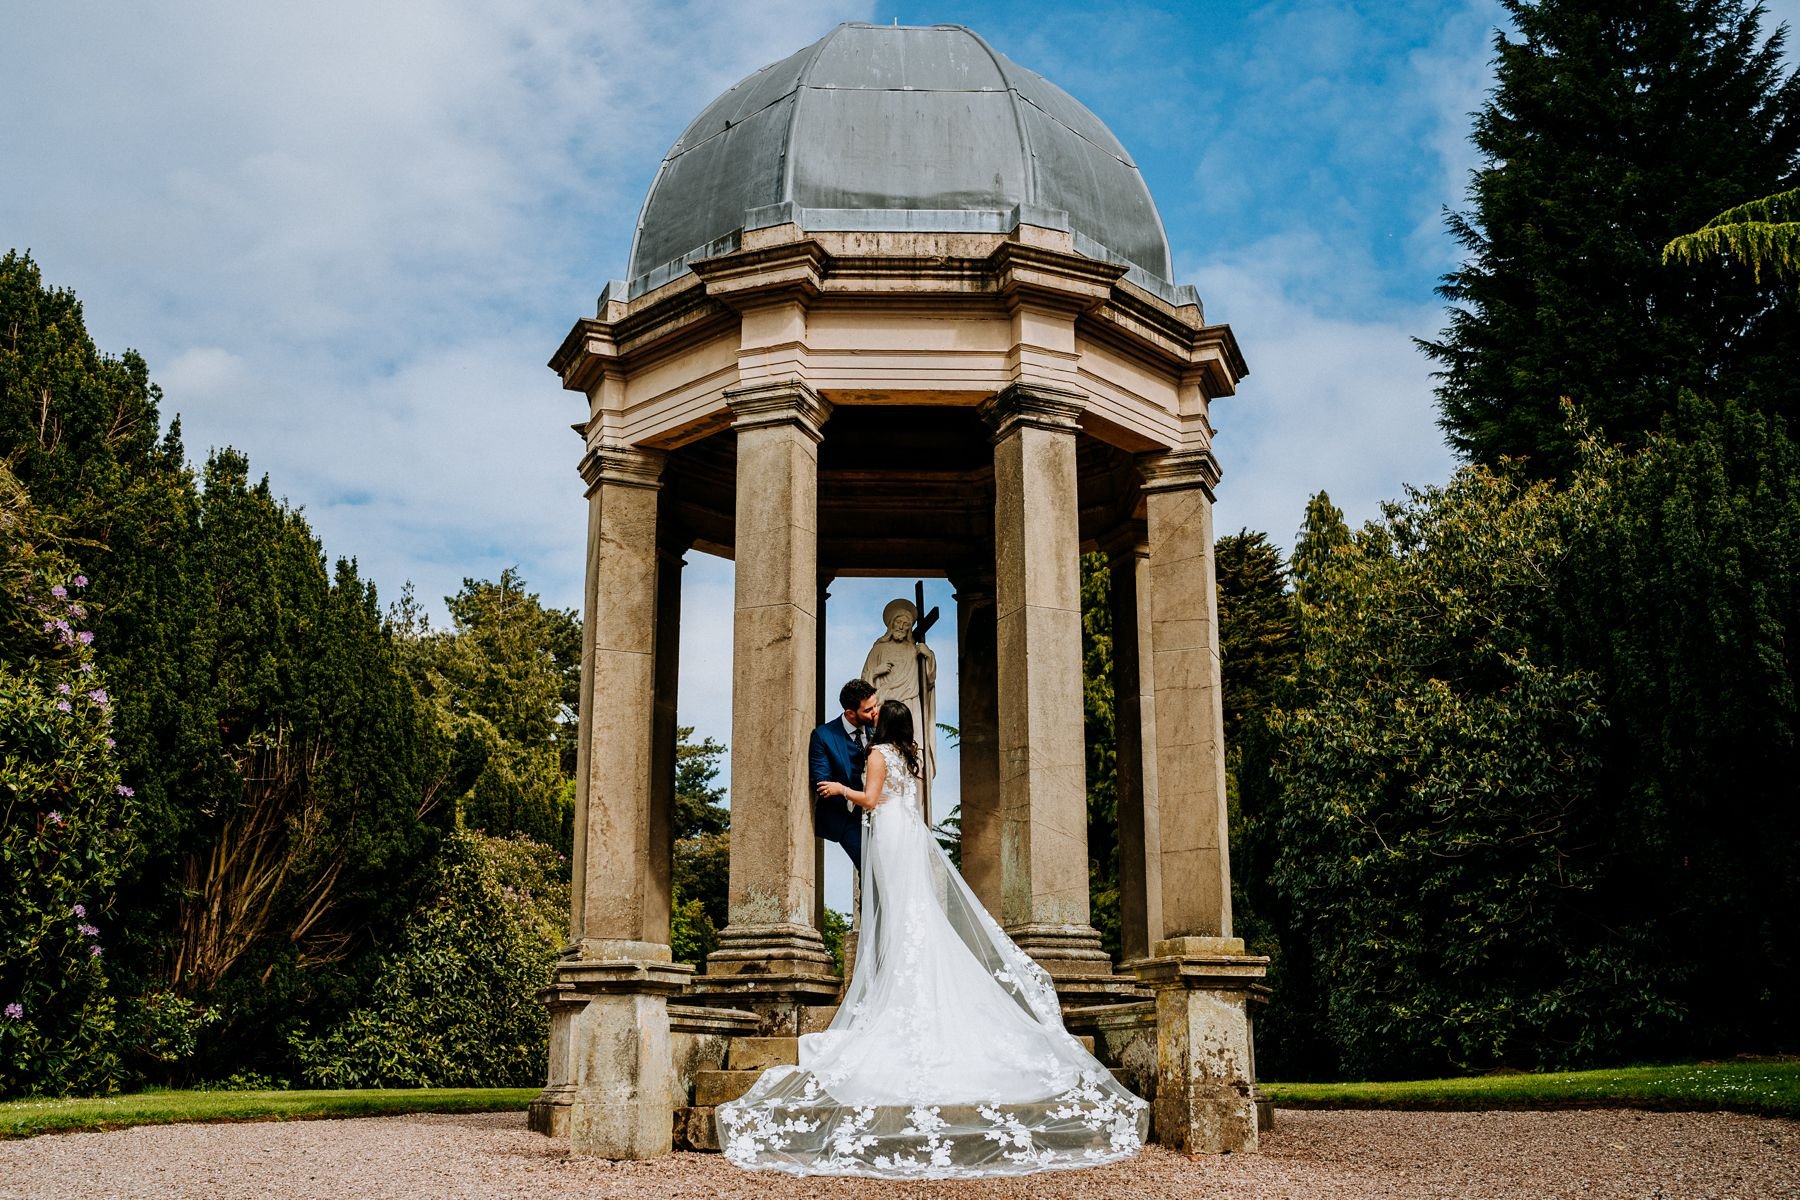  Hawkstone Hall wedding venue and wedding photography Shrewsbury  https://hawkstonehall.co.uk 